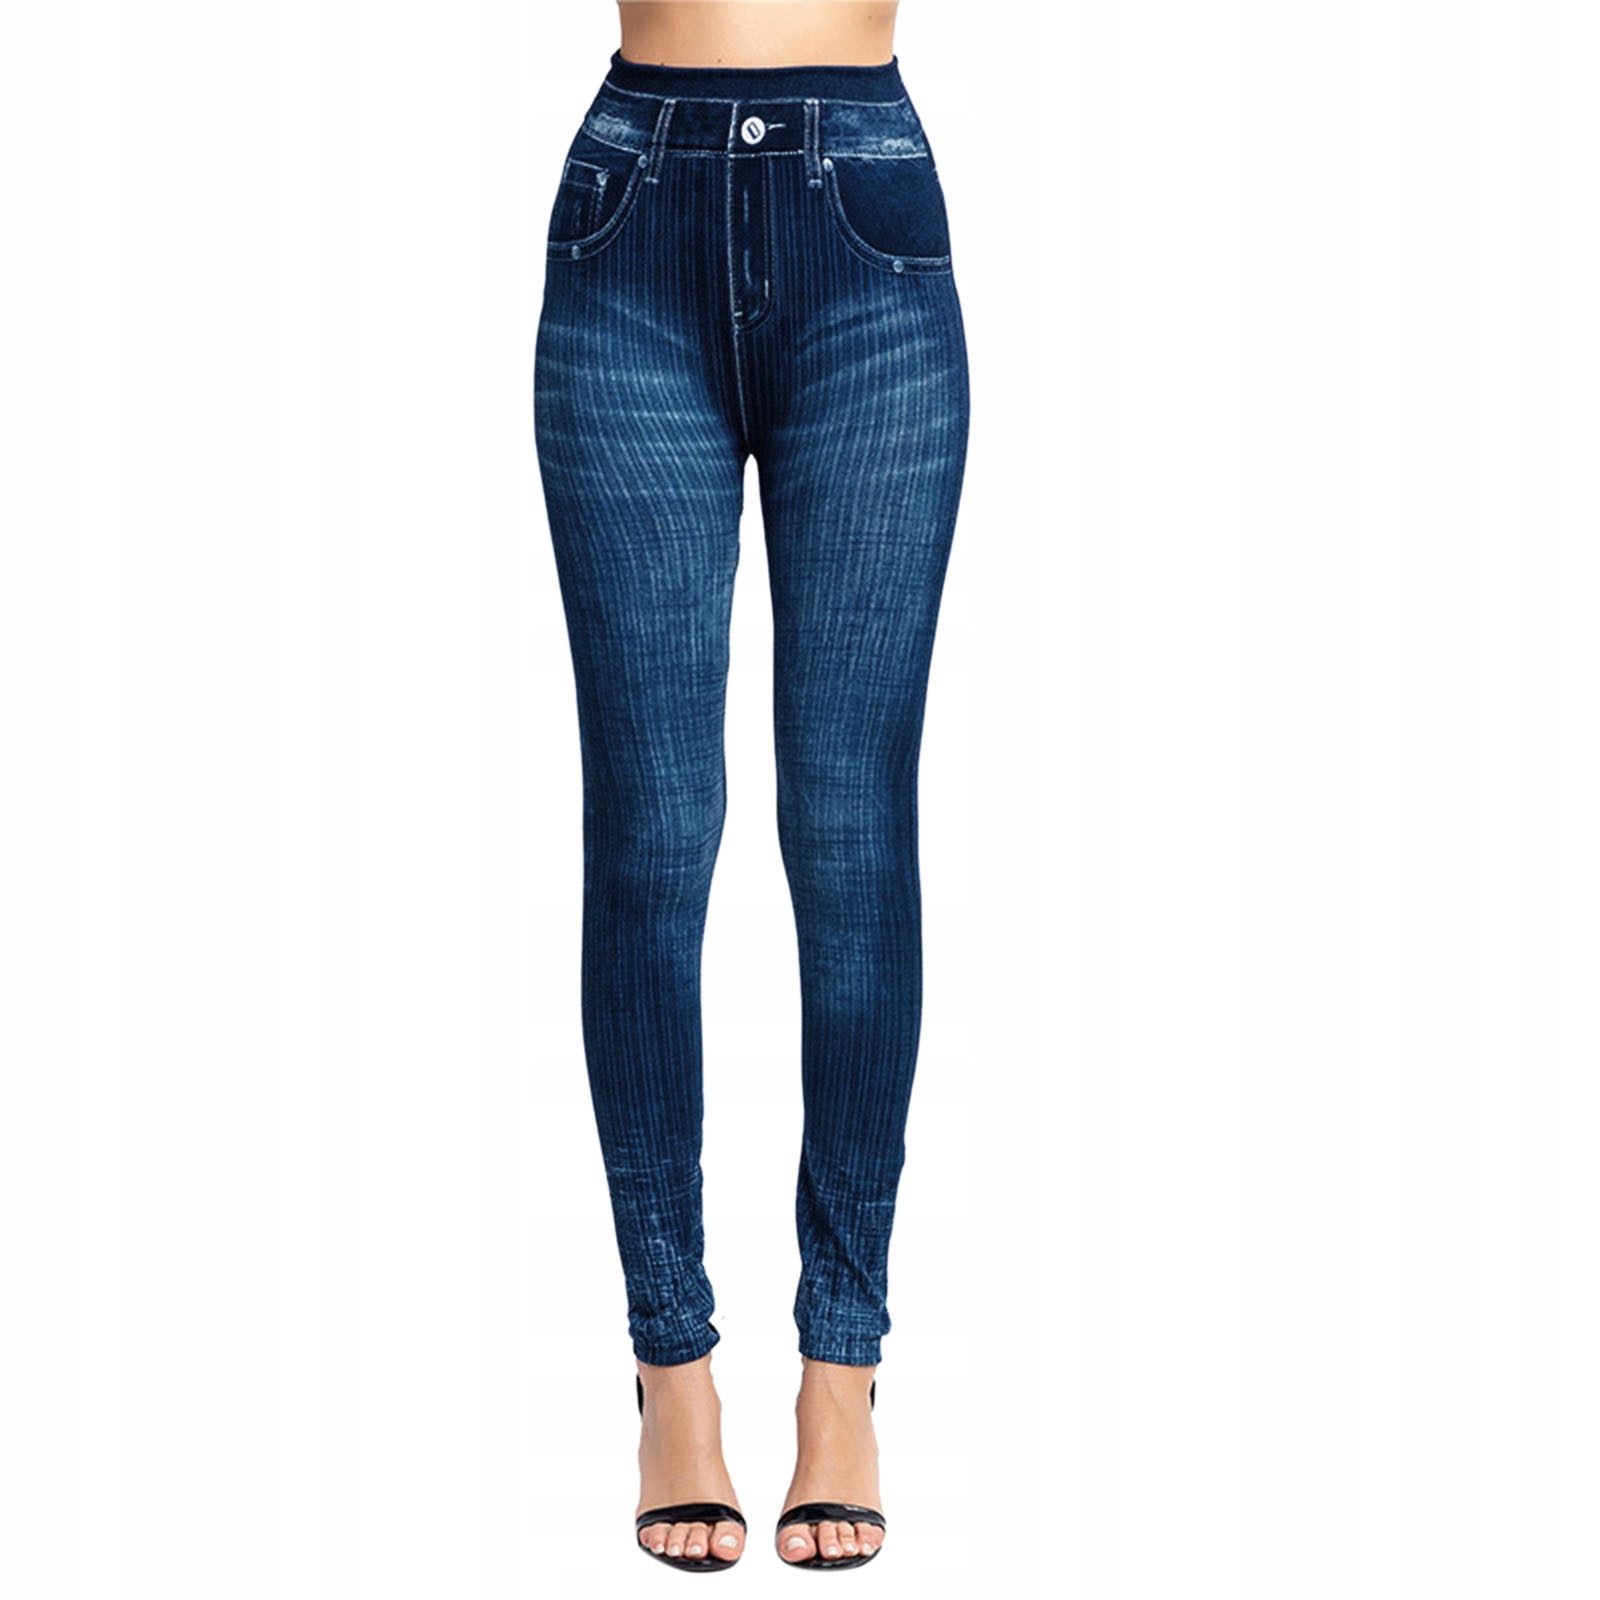 Elastic Jeans Denim Leggings For Women Plus Size T 14368644412